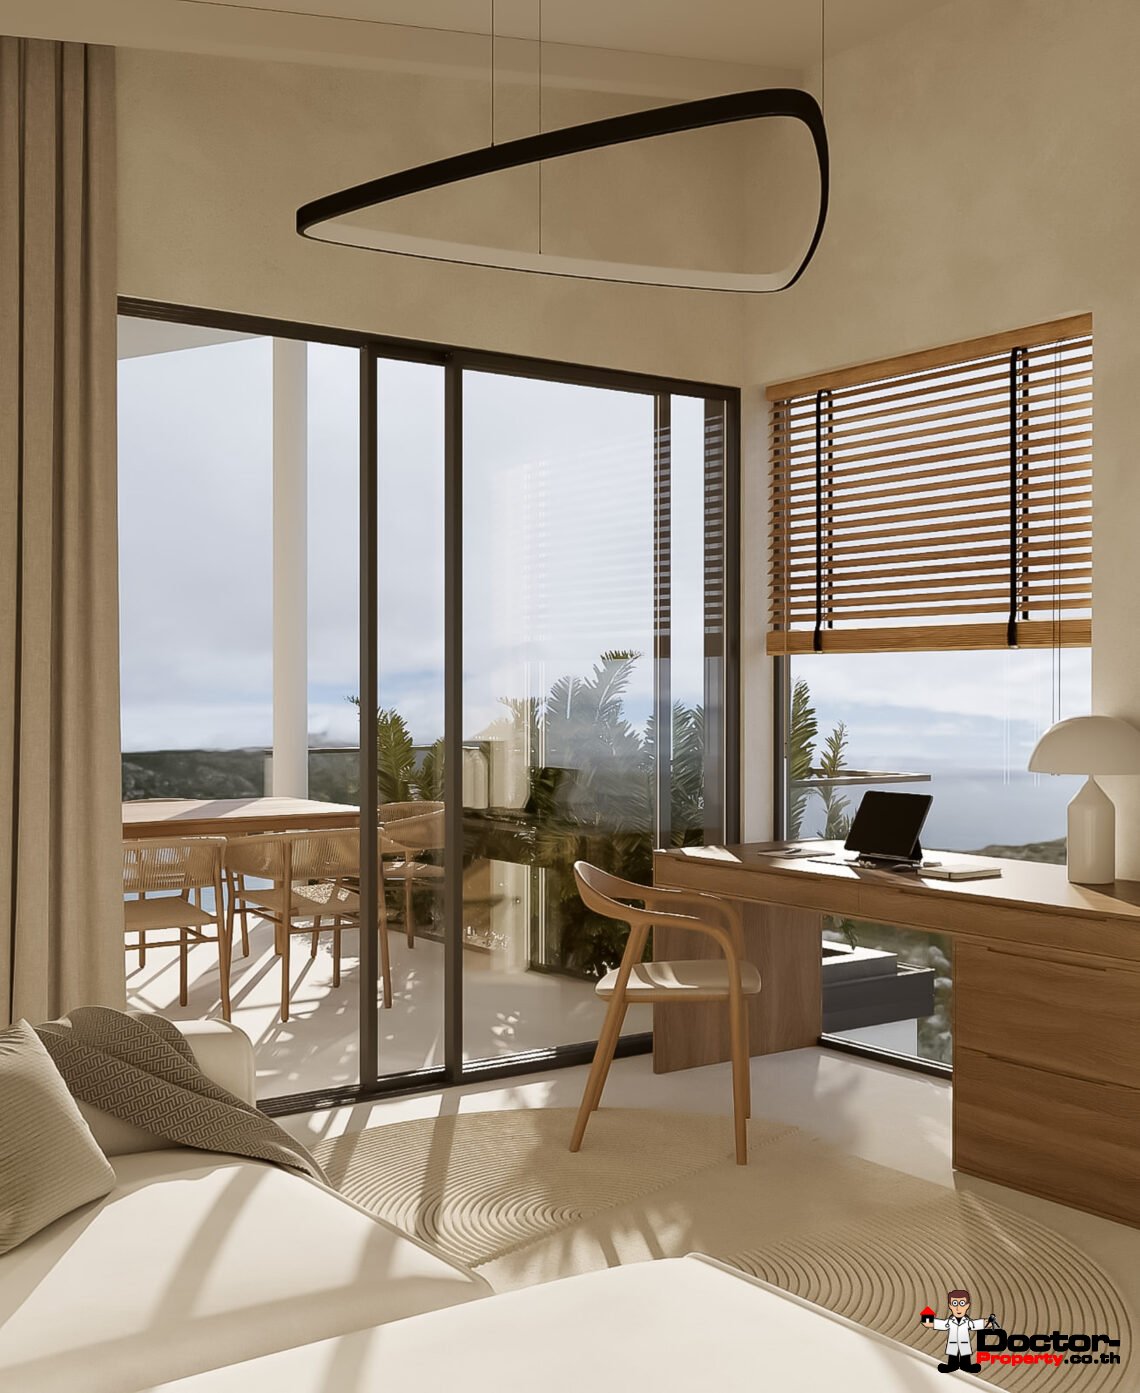 New 3 Bedroom Villa with Sea View in Plai Laem, Koh Samui – For Sale